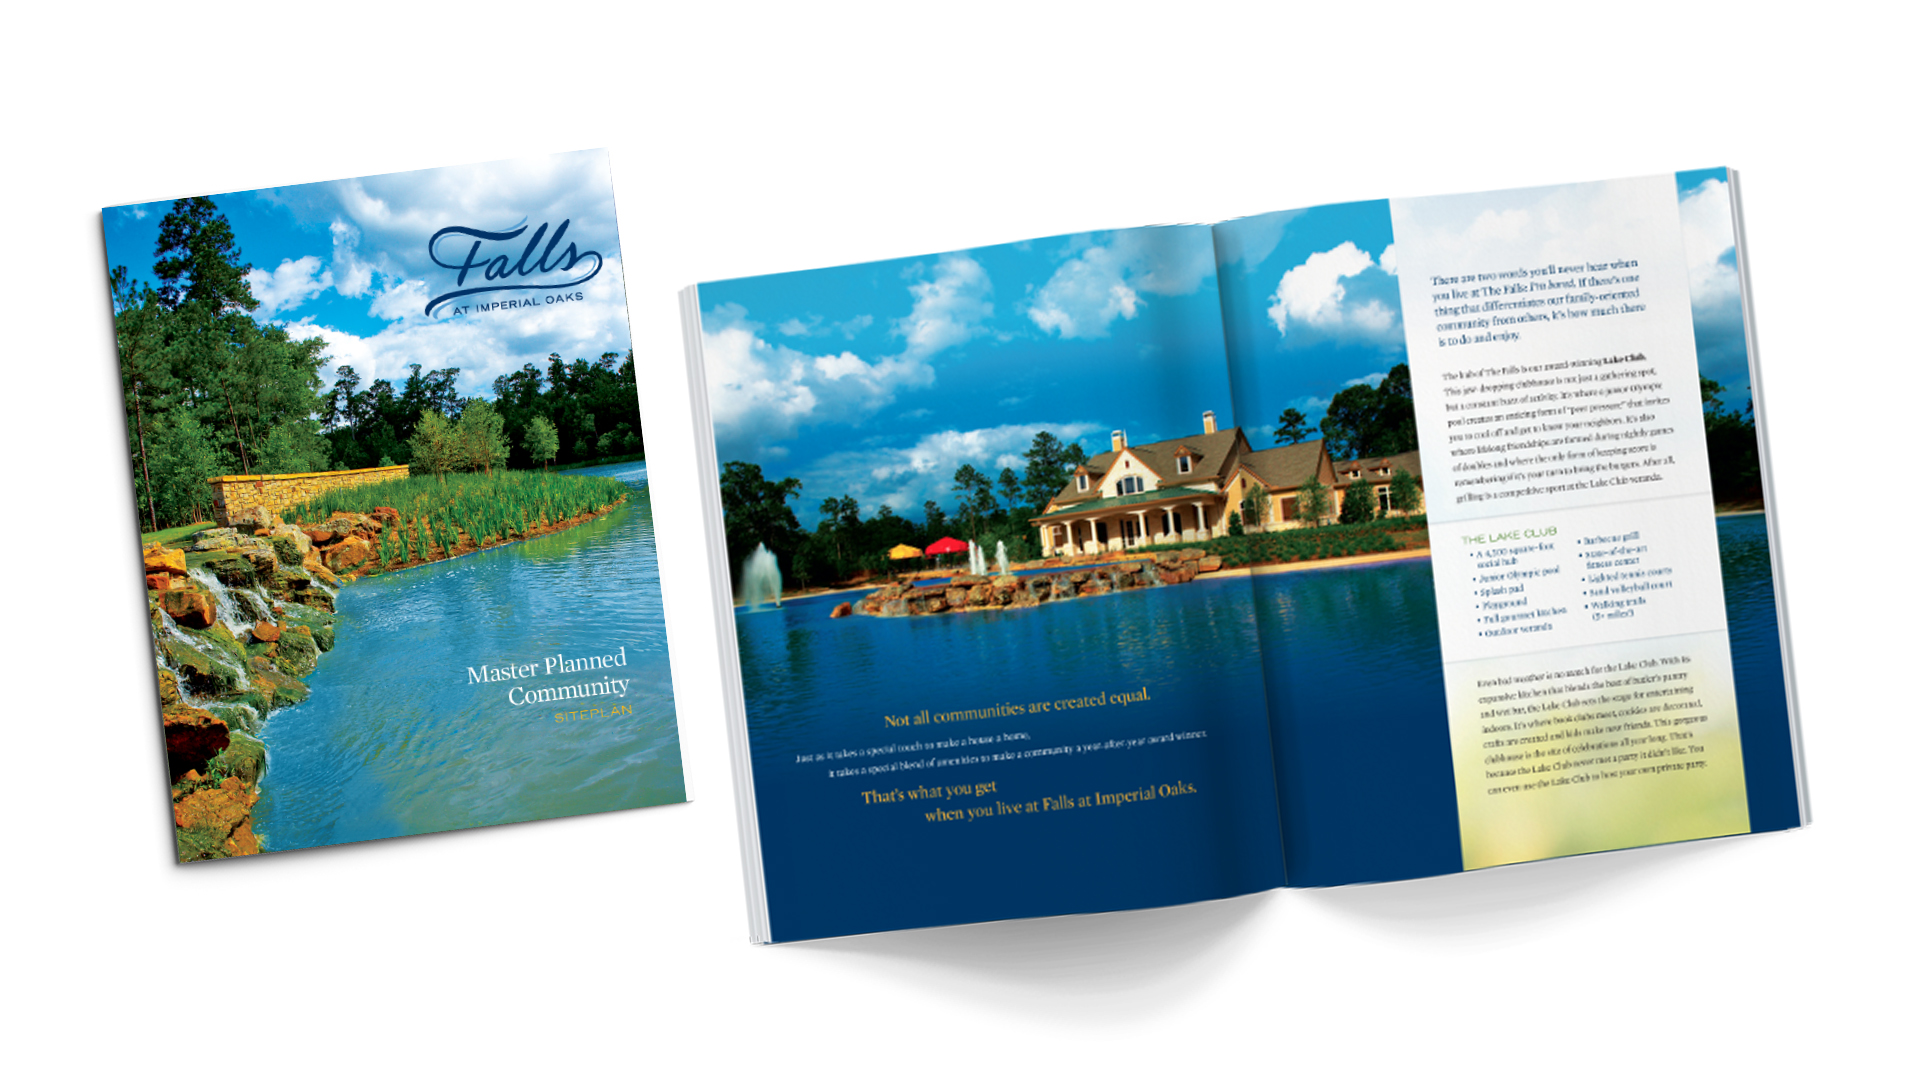 Falls-siteplan-brochure-1920x1080